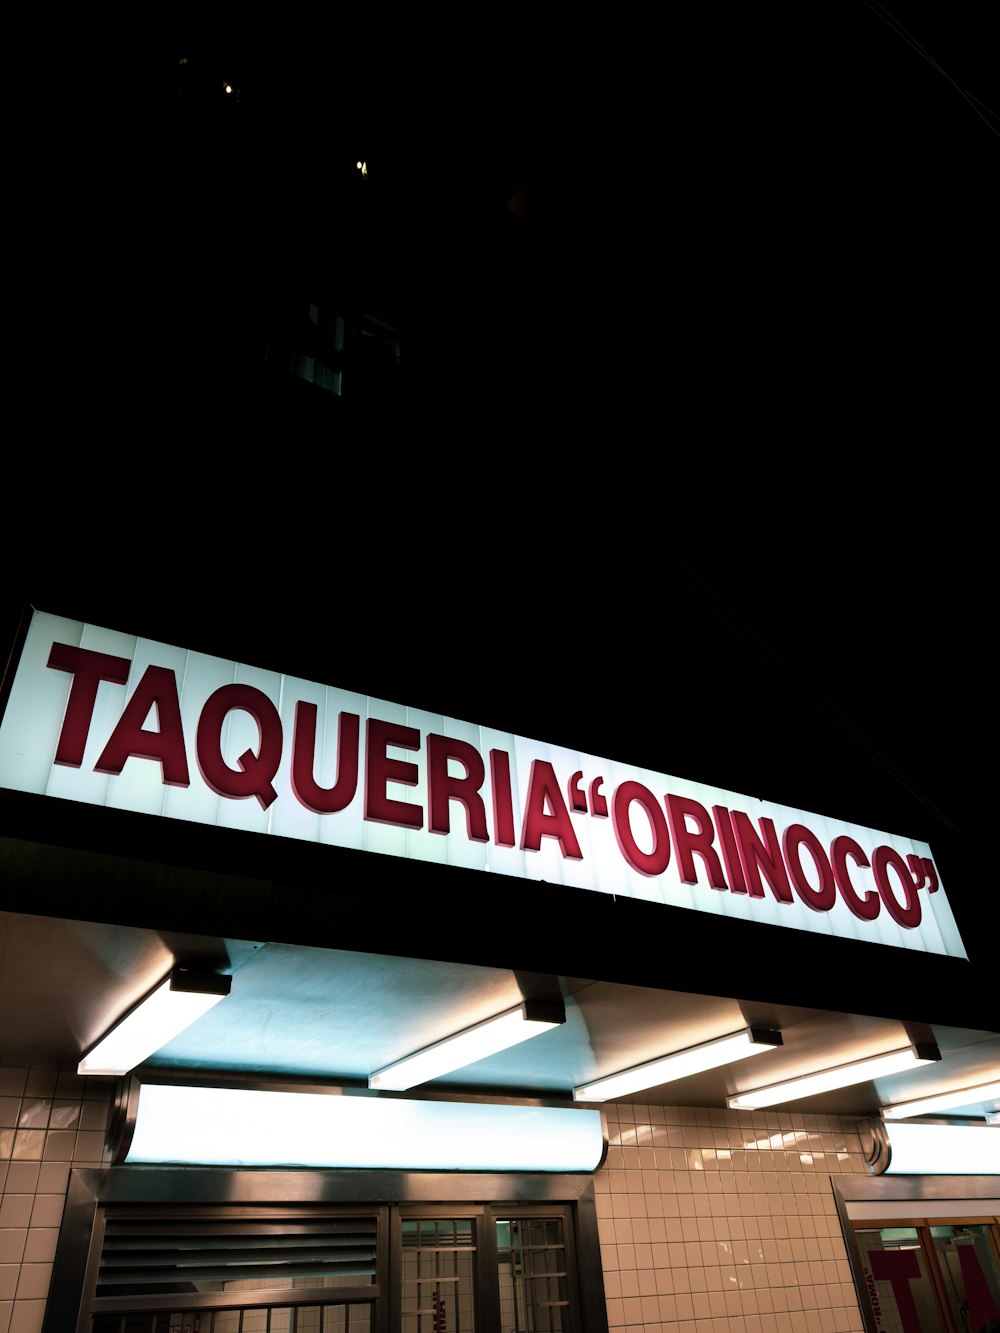 a taqueria orinoco sign lit up at night